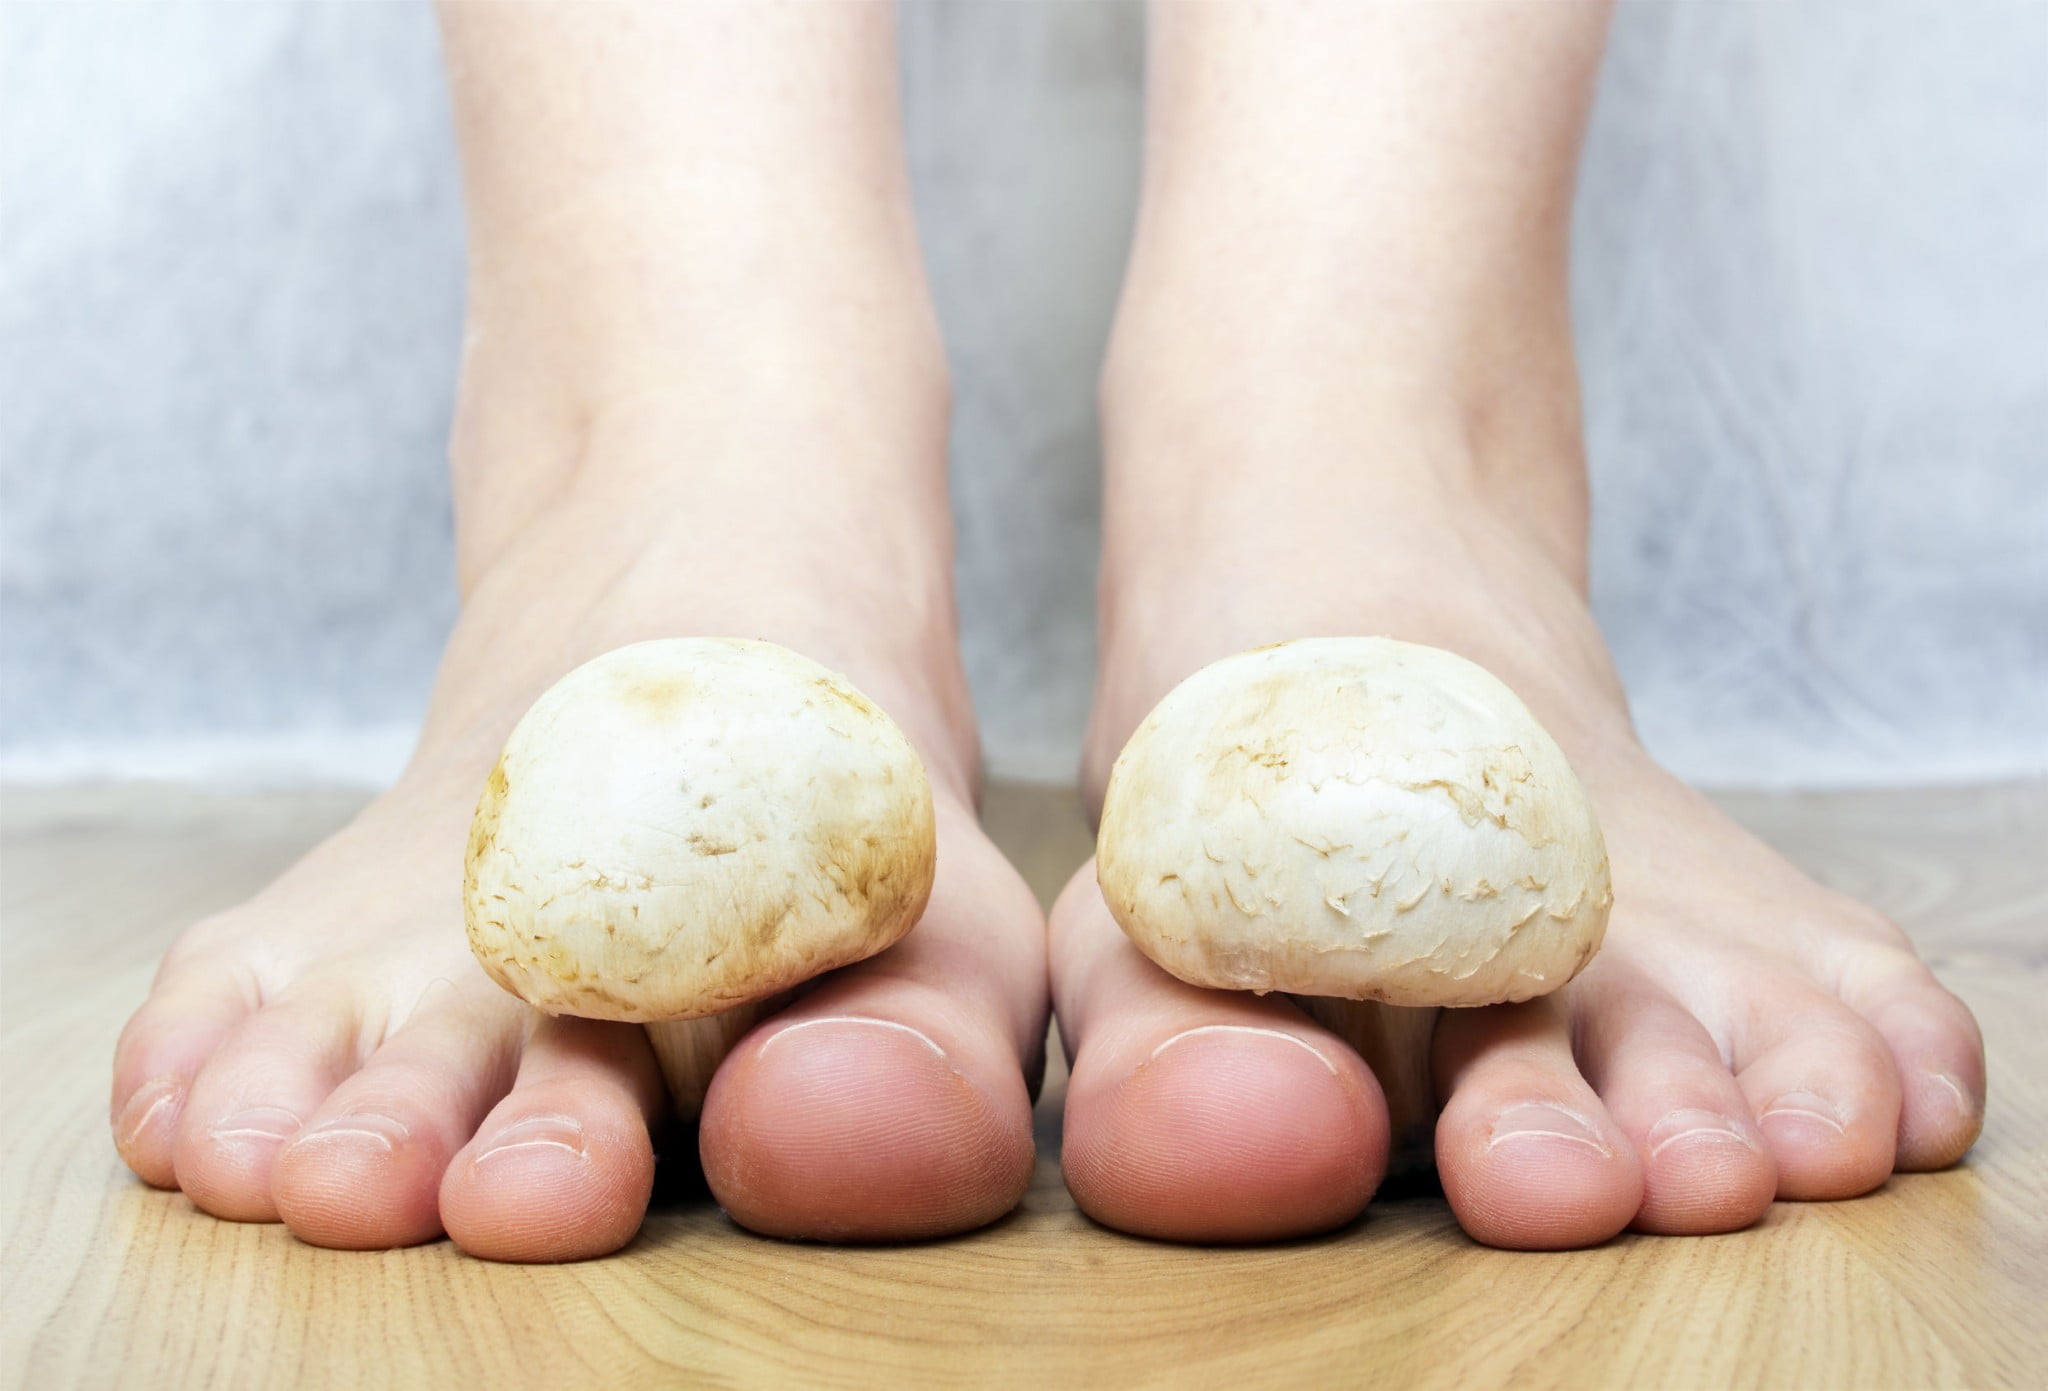 feet with mushrooms: tinea